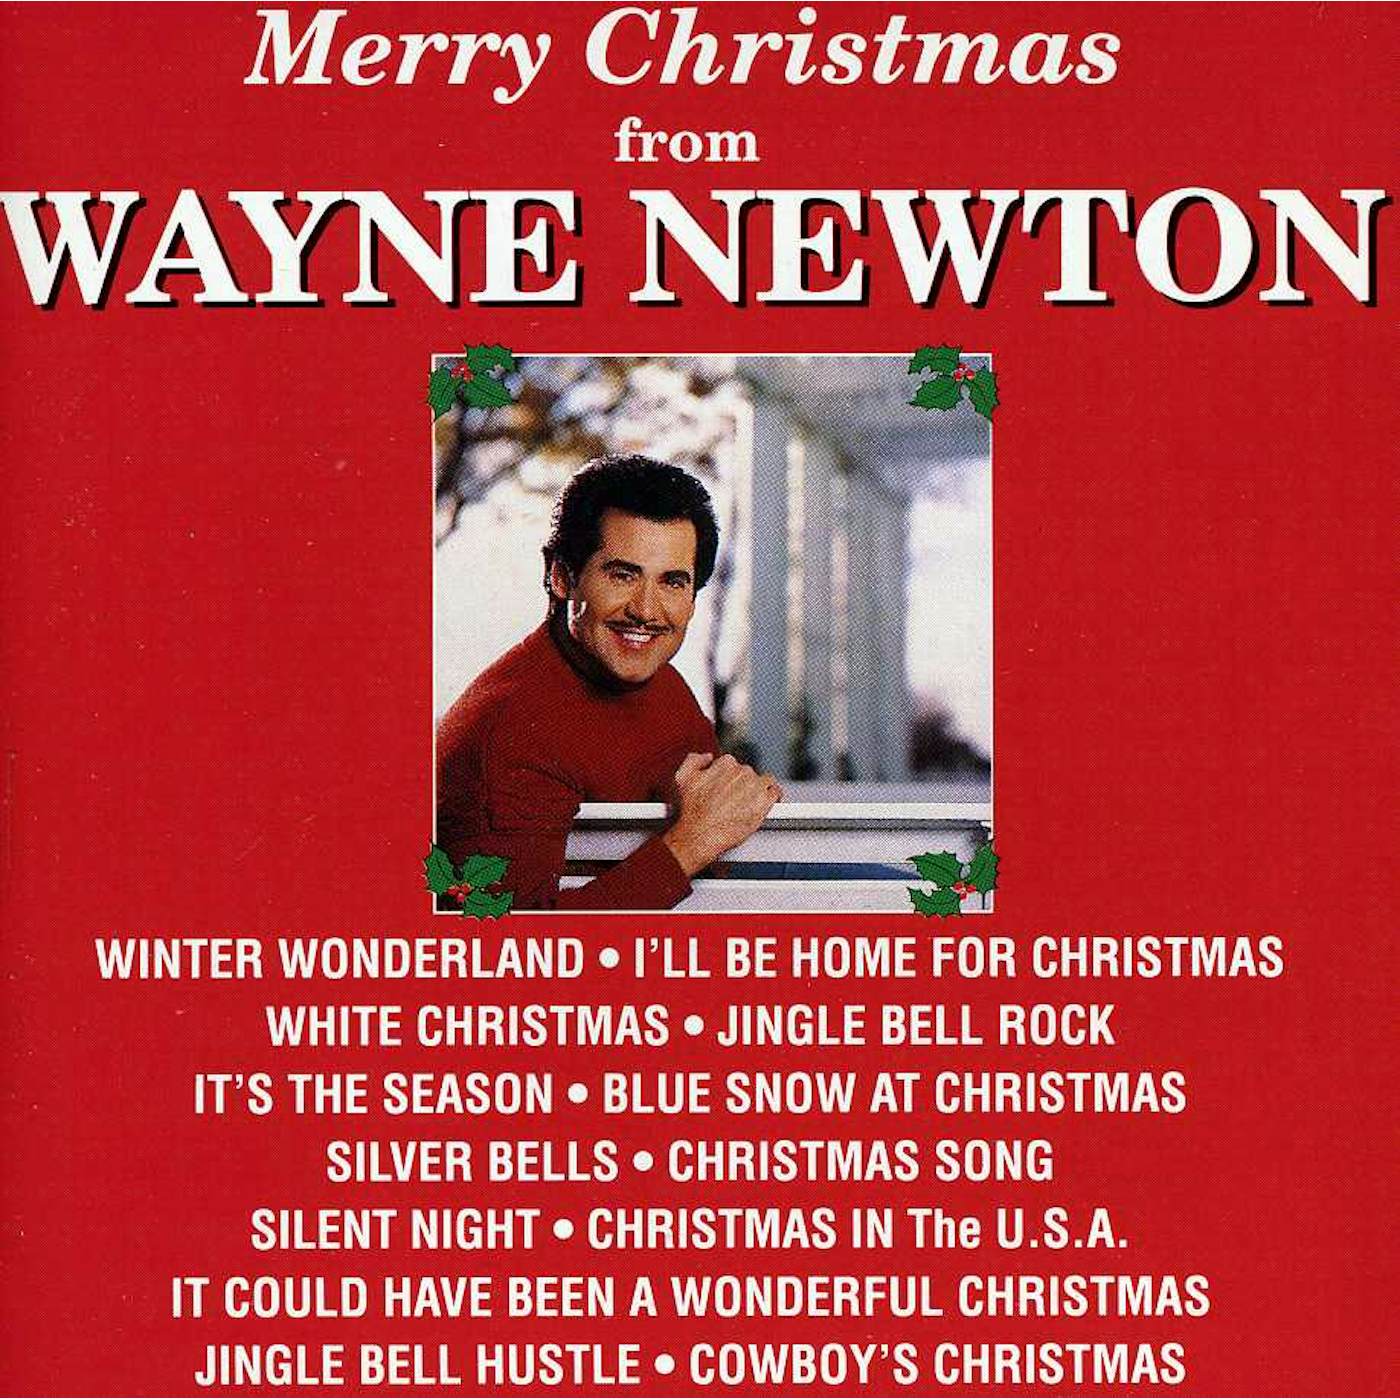 MERRY CHRISTMAS FROM WAYNE NEWTON CD